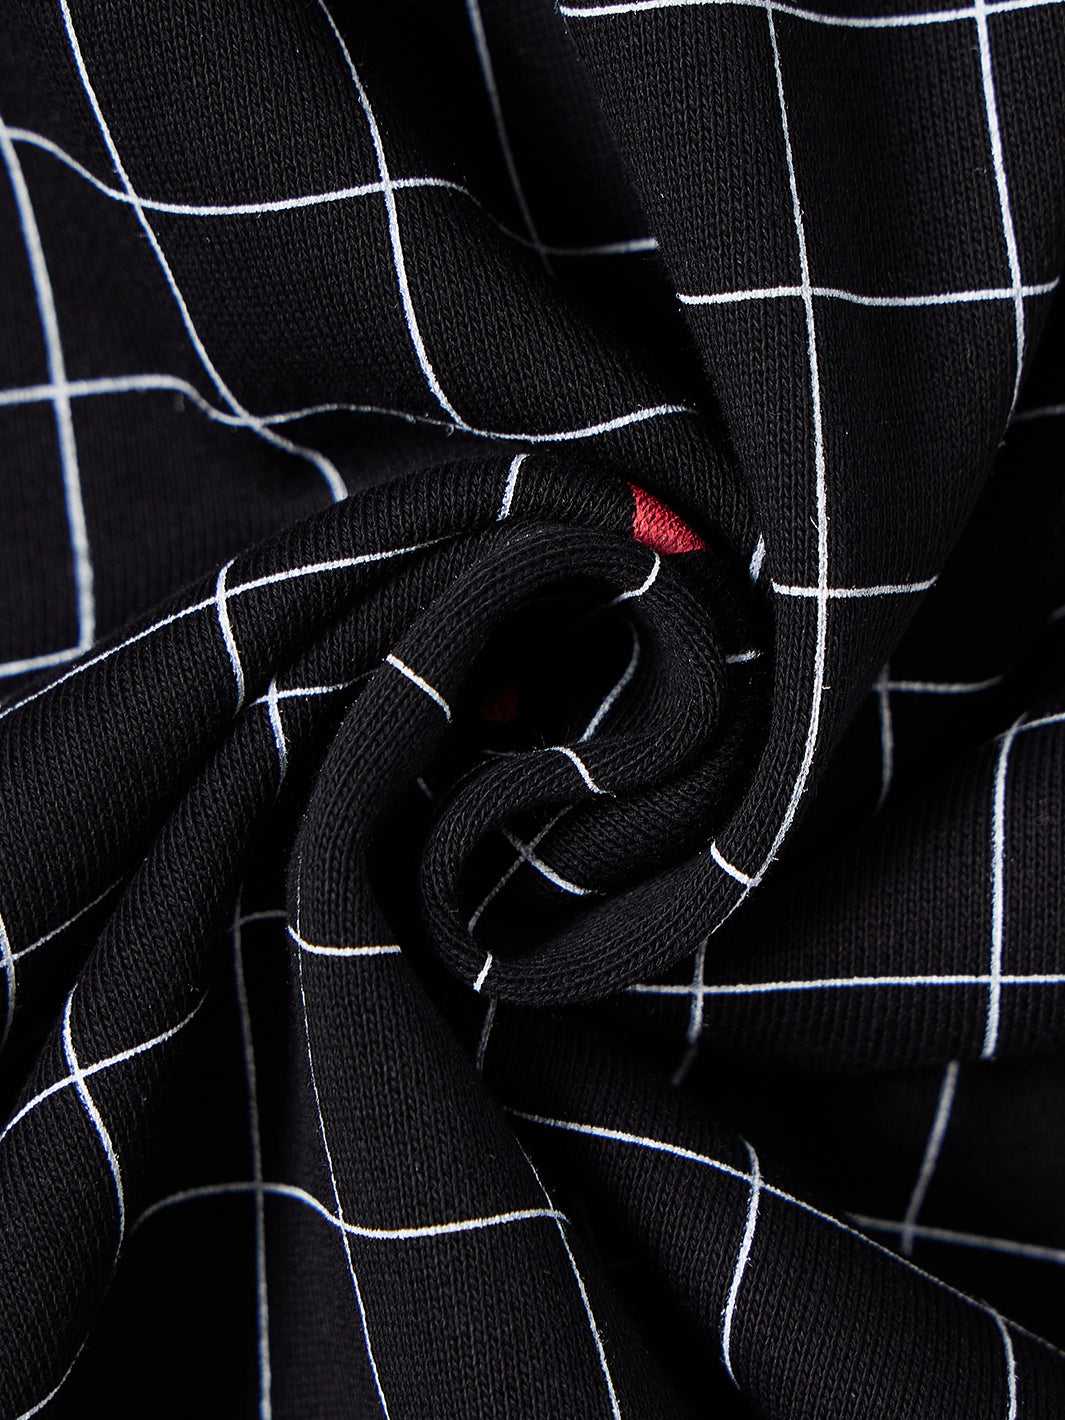 Grid Heart Print Dress - Black